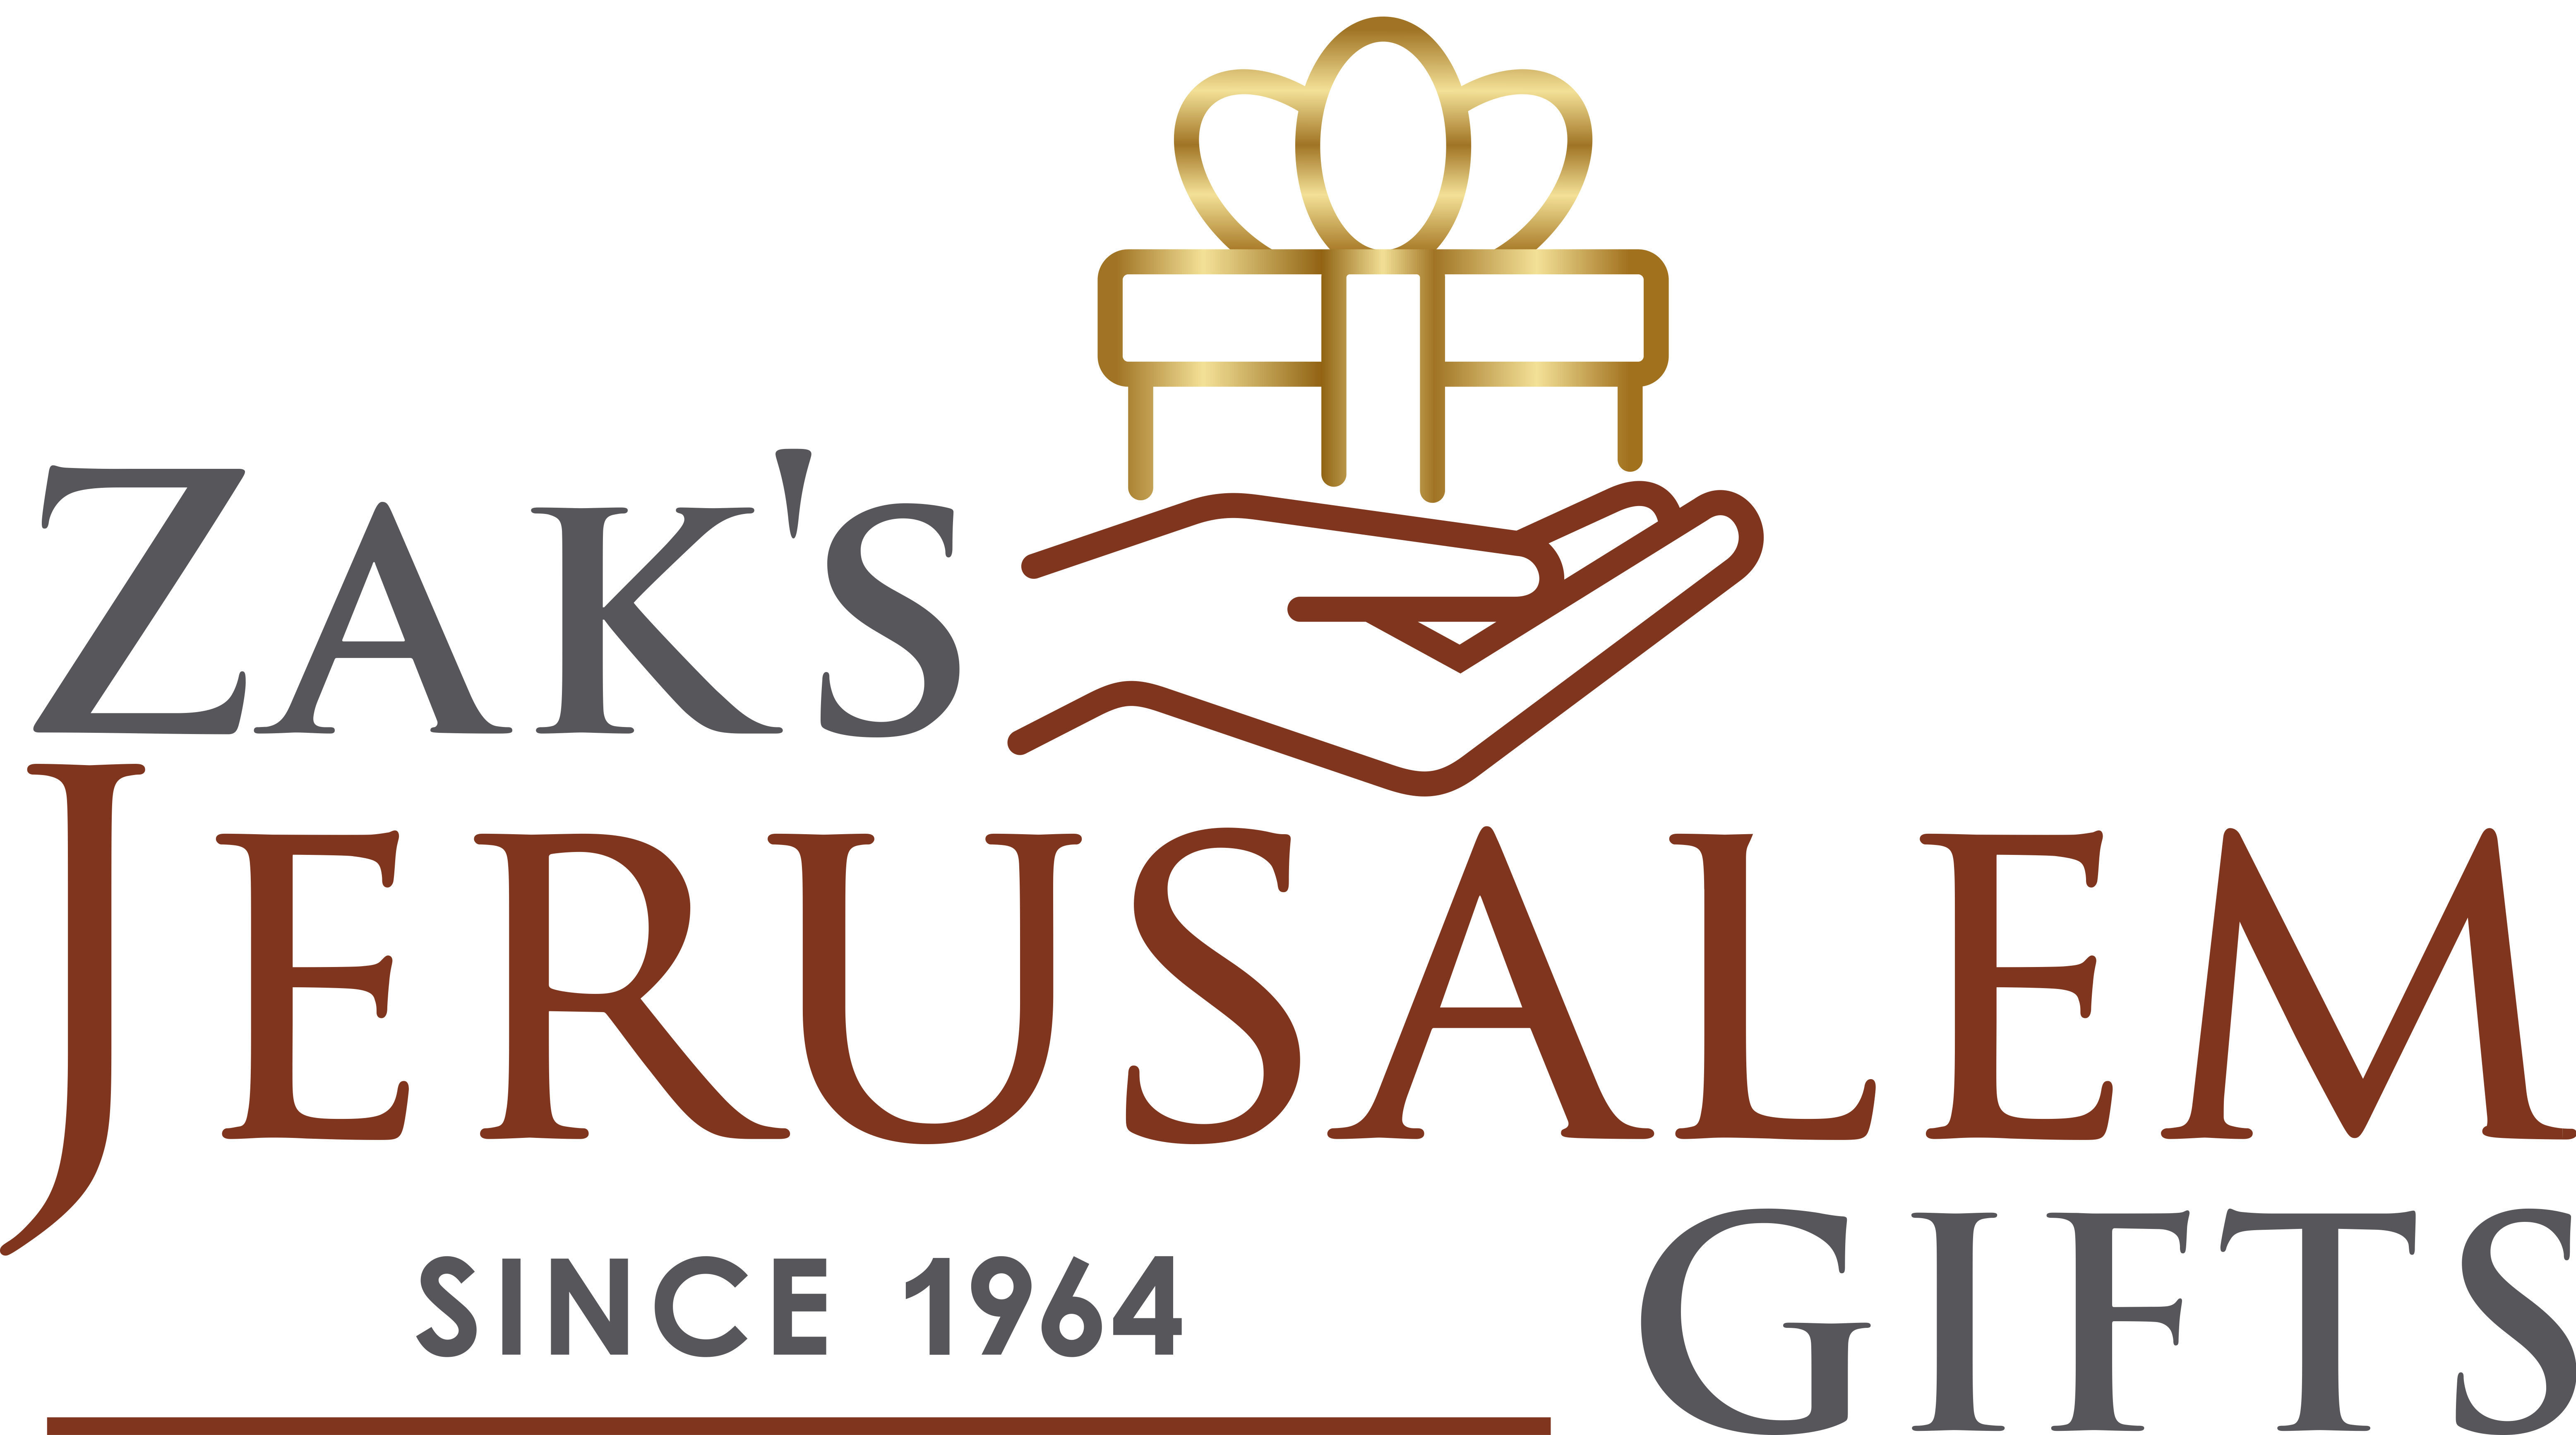 Zak's Jerusalem Gifts – Christian Gift Shop in Israel